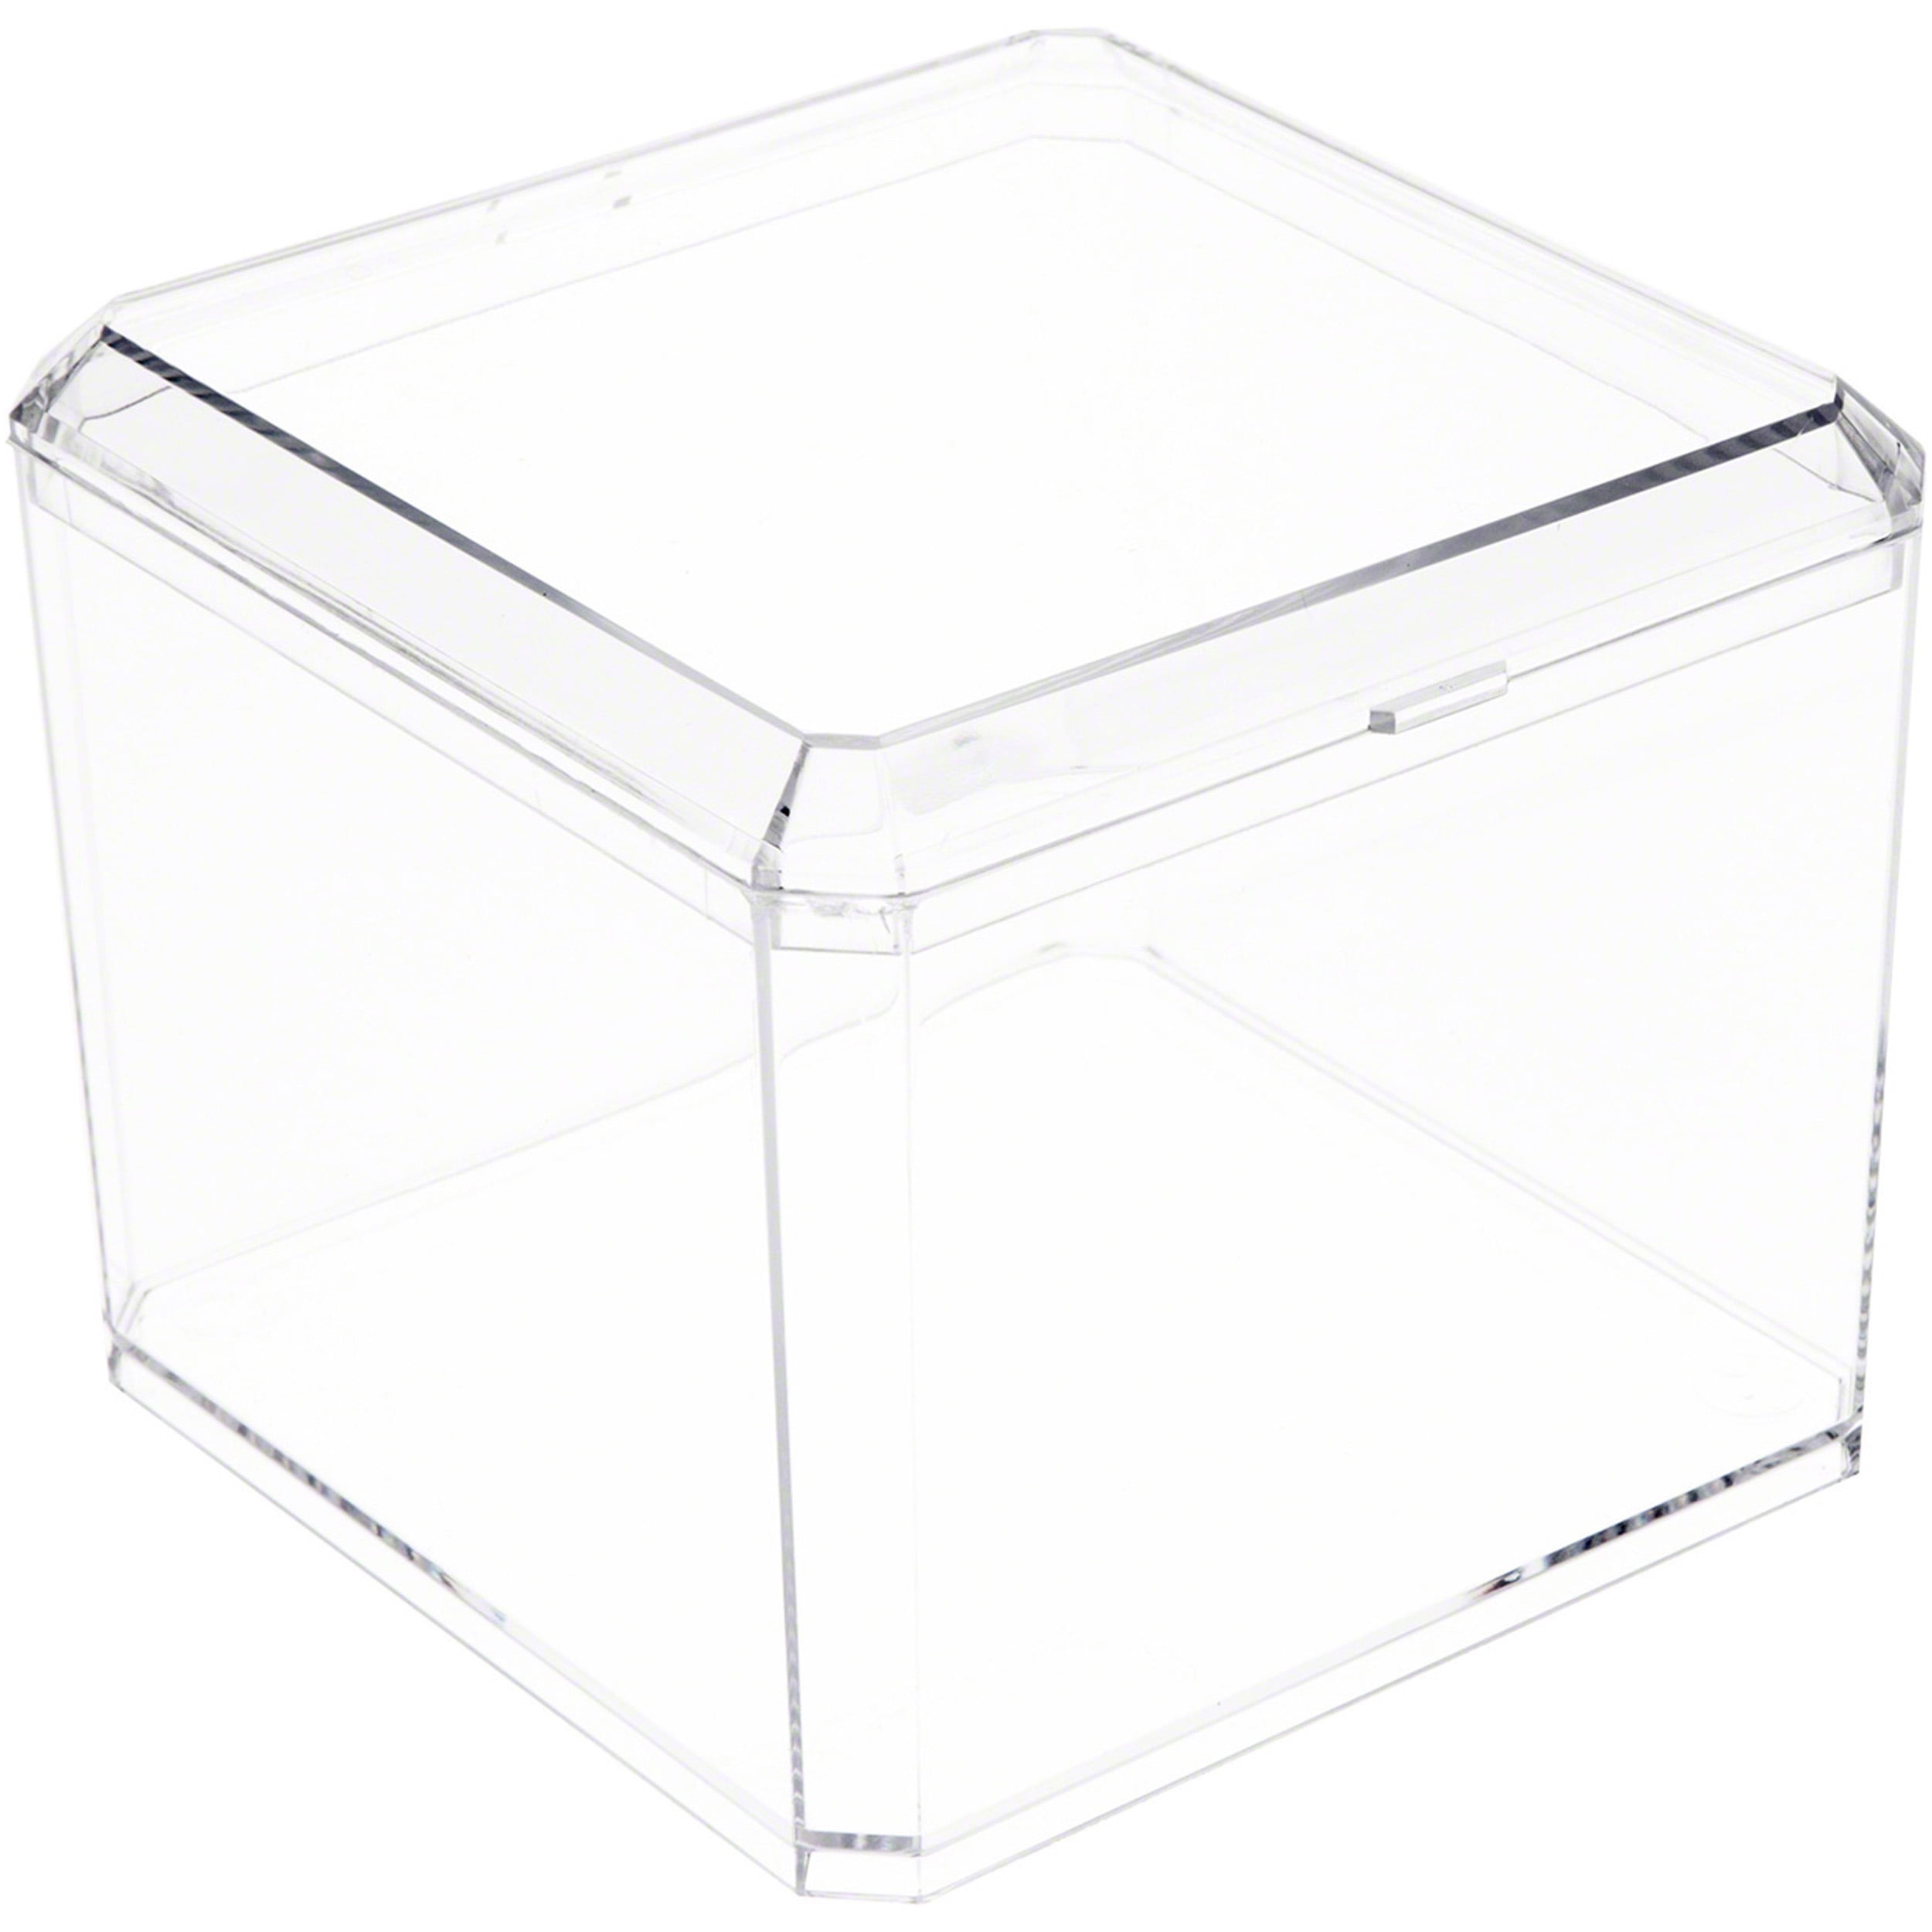 Pioneer Plastics 028C Clear Square Plastic Container, 3.75 W x 3.0625 H,  Pack of 4 